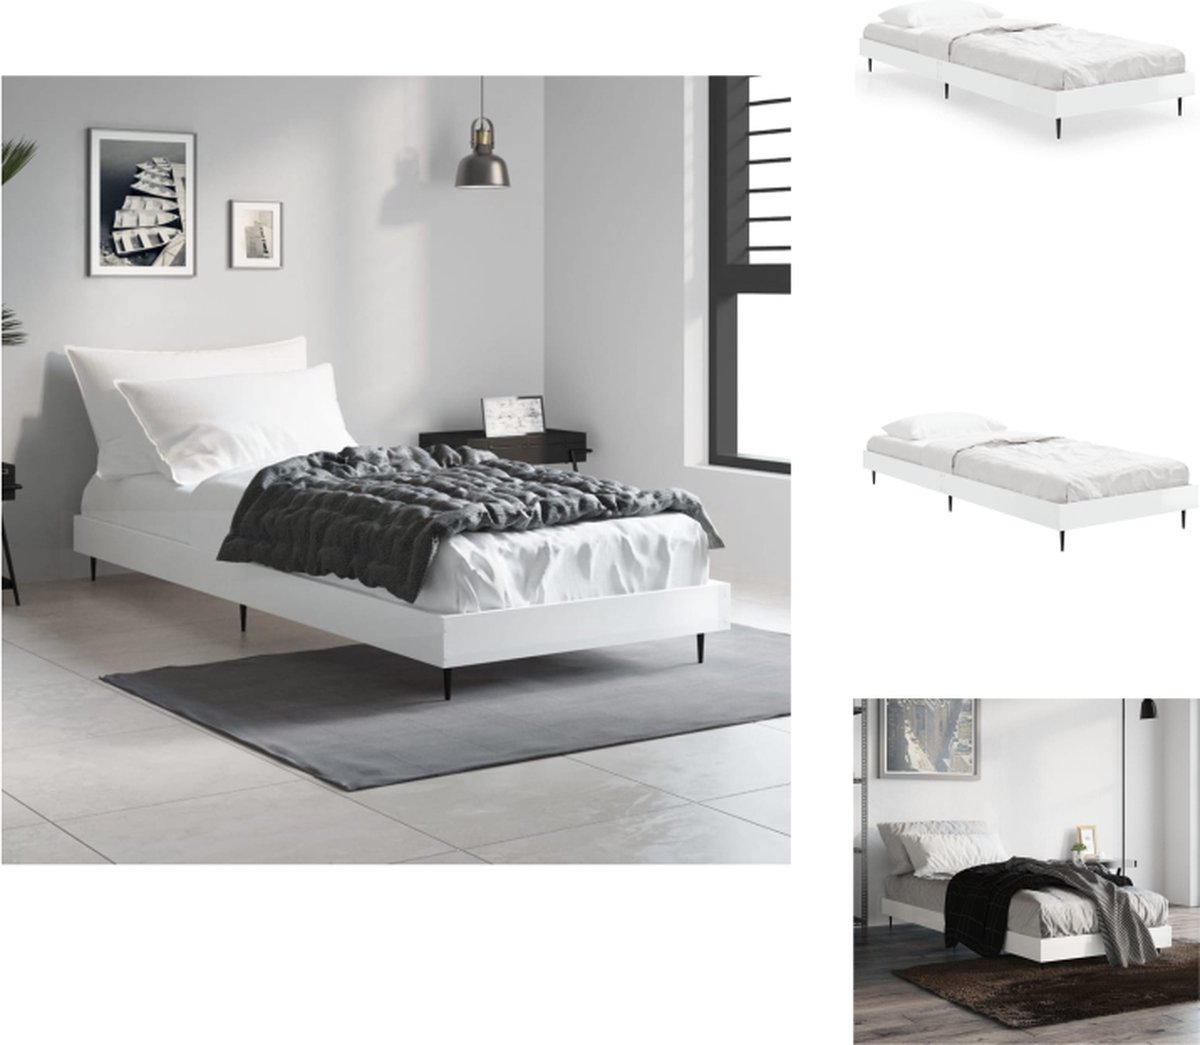 VidaXL Bed Frame Hoogglans wit 193 x 78 x 20 cm Duurzaam hout Metalen poten Multiplex lattenbodem Bed